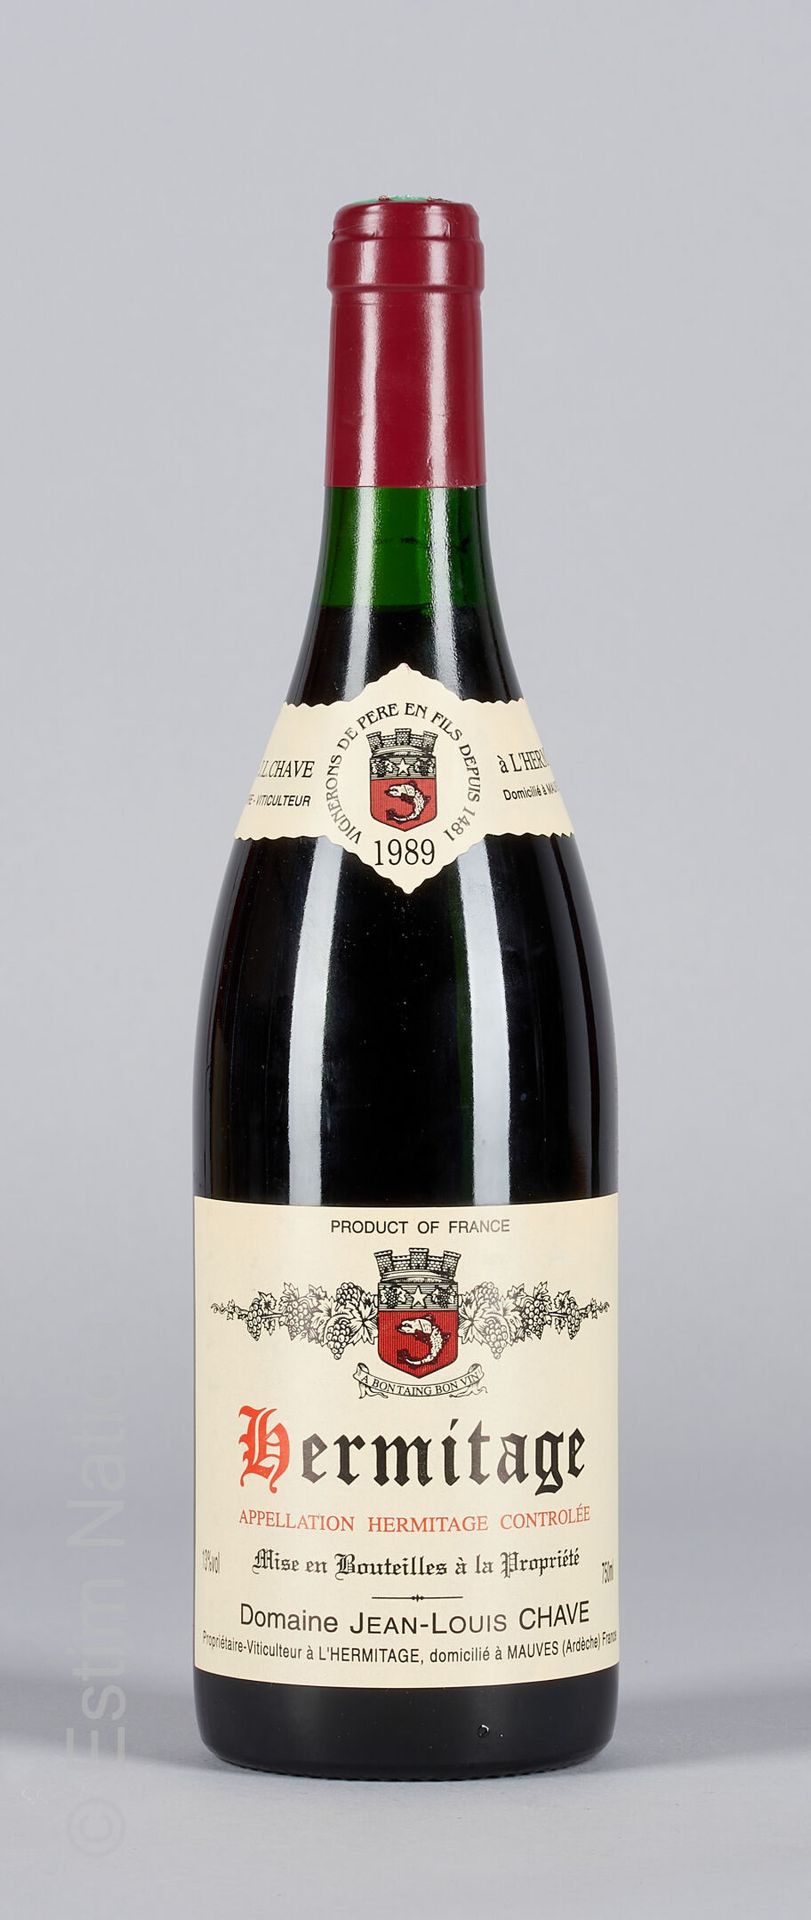 HERMITAGE ROUGE 1 bottiglia HERMITAGE 1989 Jean-Louis Chave

(N. Tra 2 e 2,5 cm)